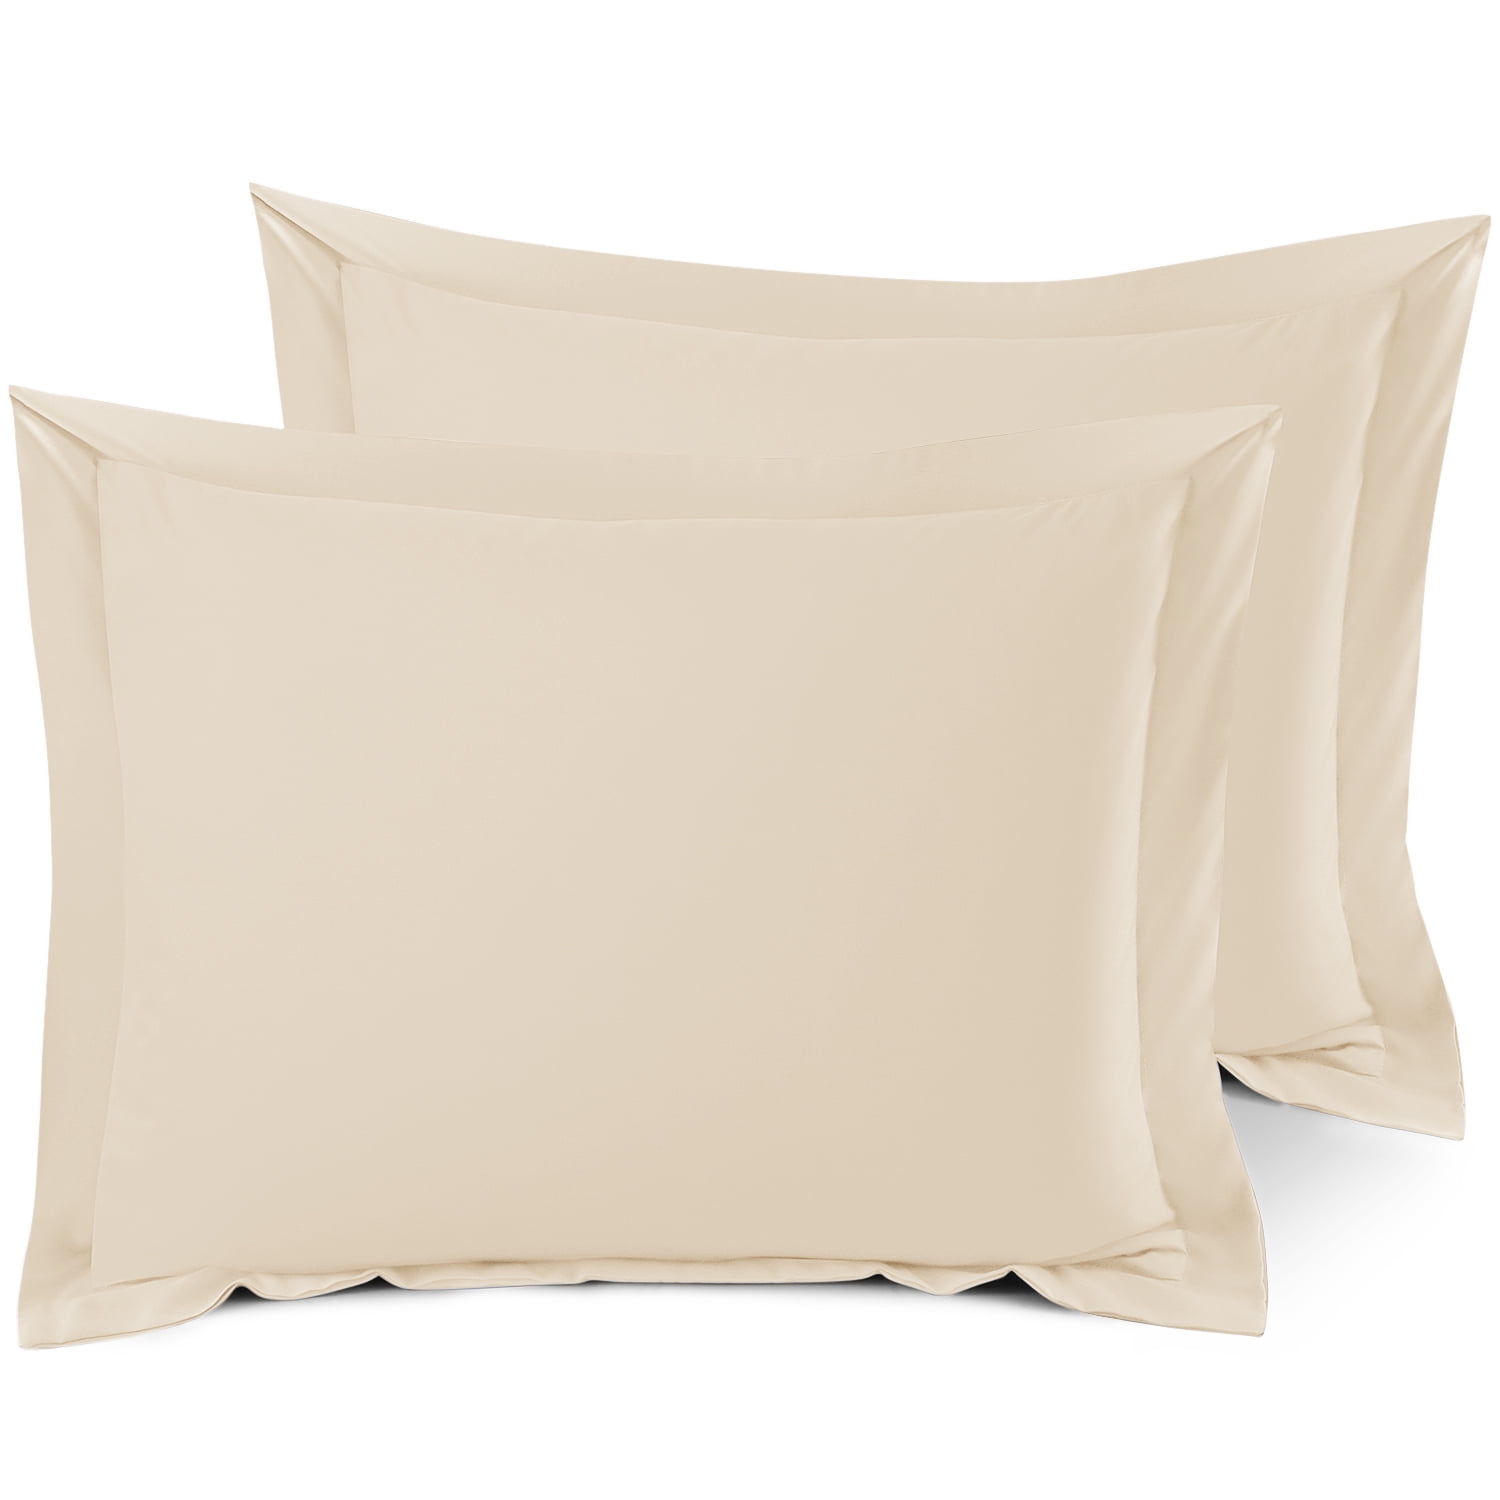 Set Of 2 Standard 20x26 Size Pillow Shams Beige Cream Hotel Luxury Soft Double Brushed